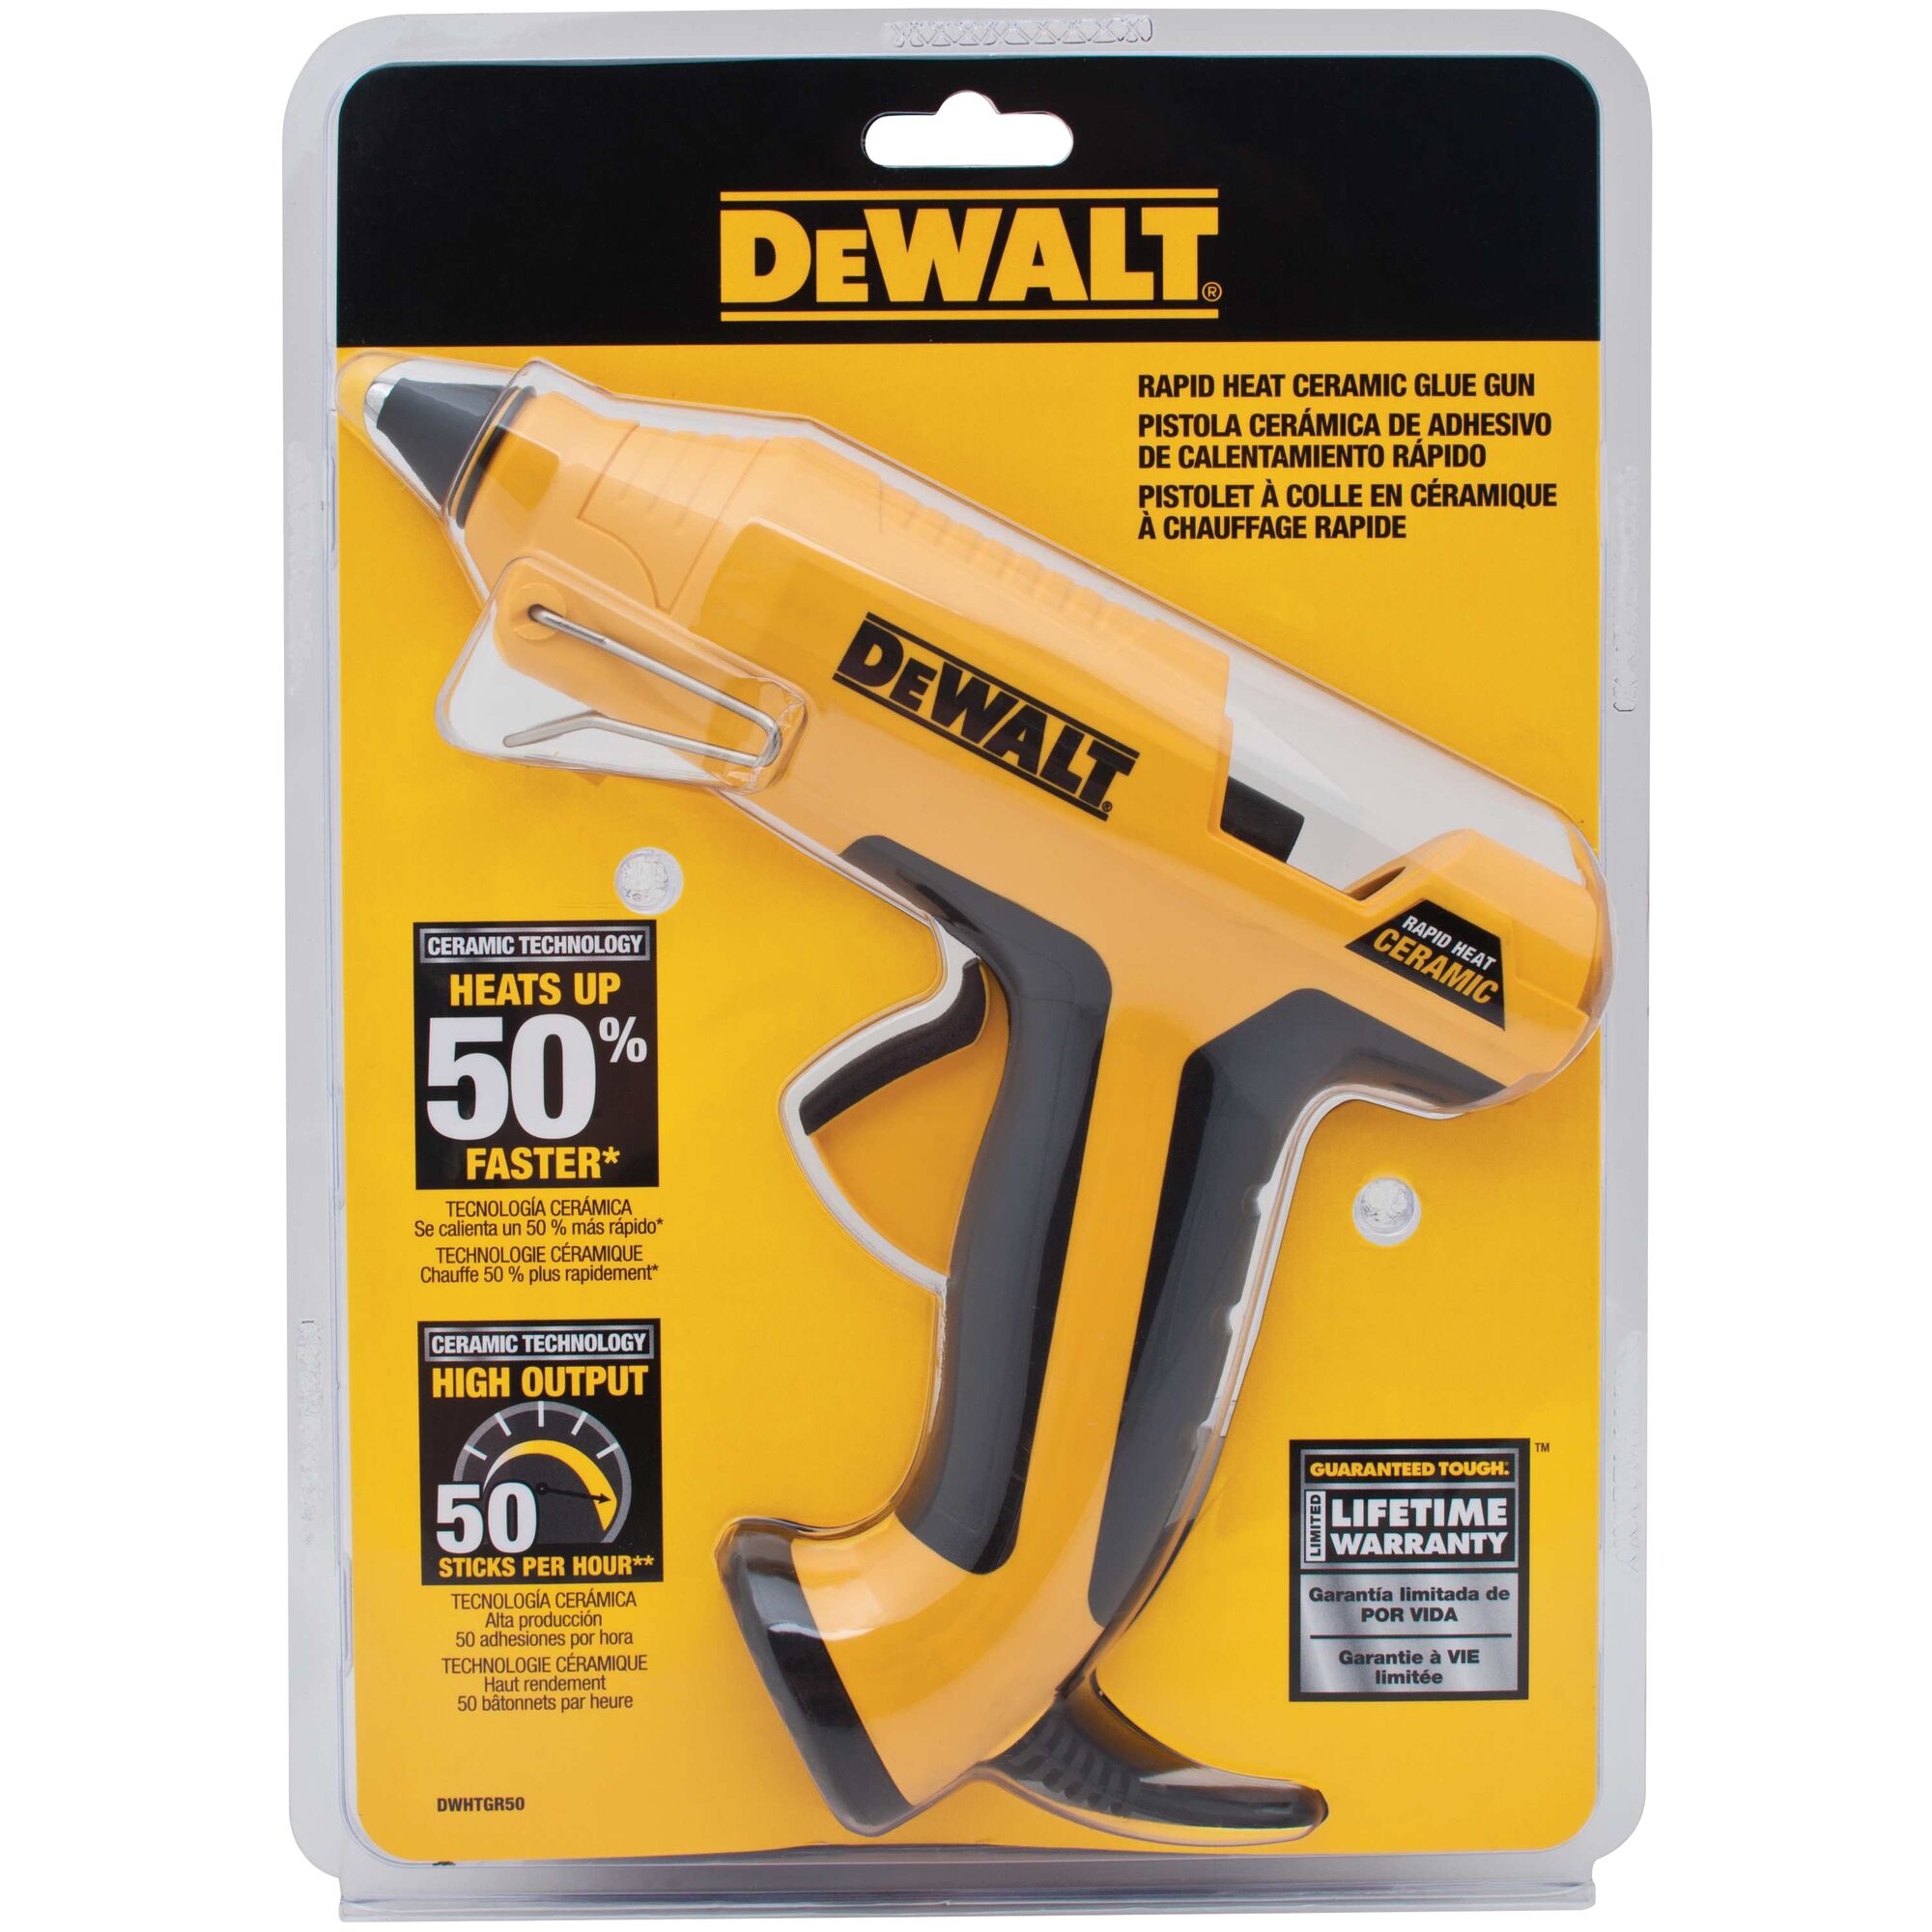 DEWALT Ceramic Rapid Heat Dual Temperature Full Size Glue Gun DWHT75098 Fast B56 for sale online 